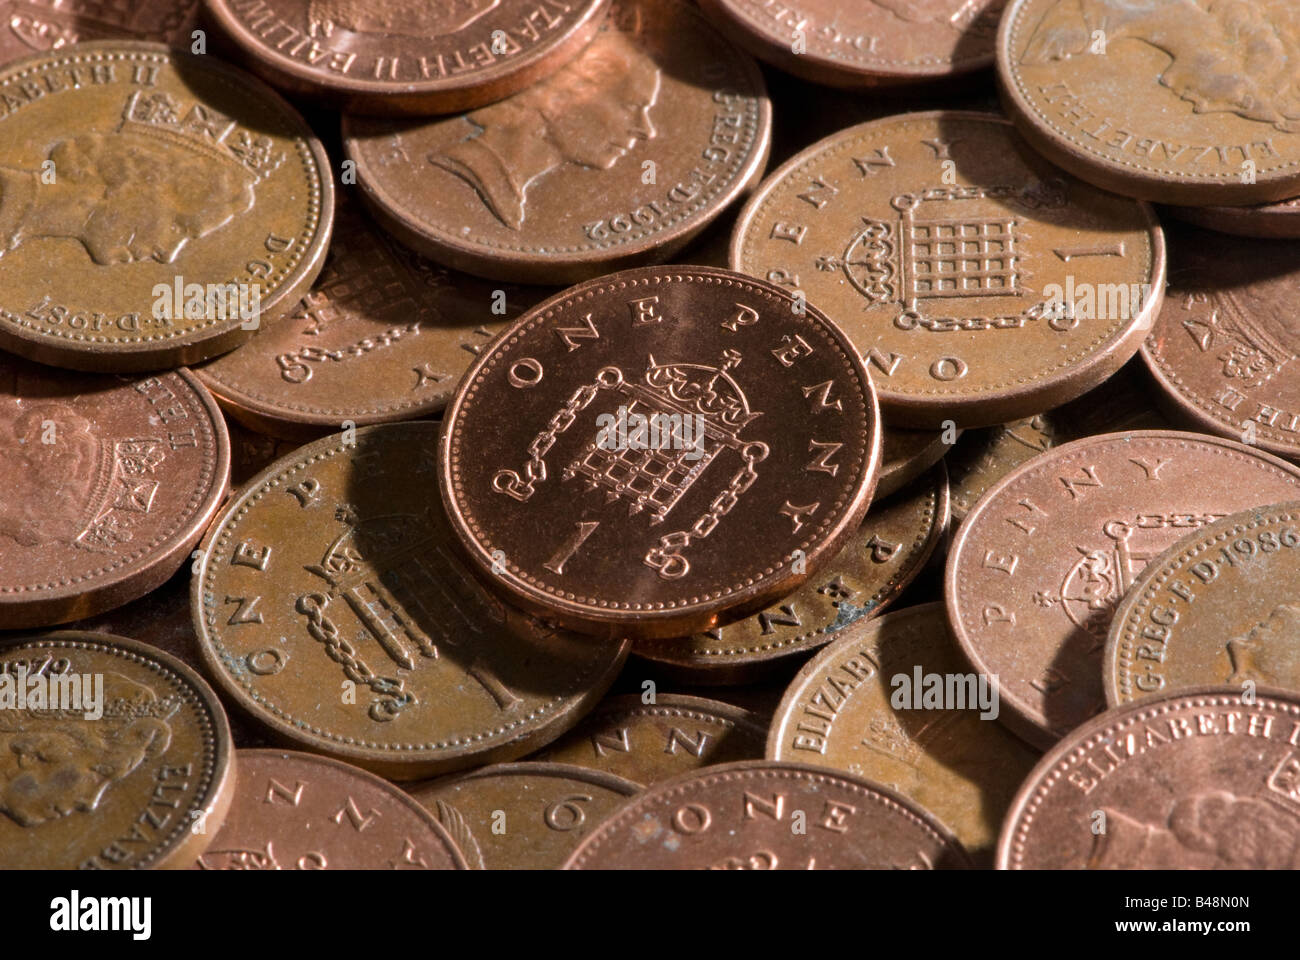 Stirling monedas de un centavo. Foto de stock